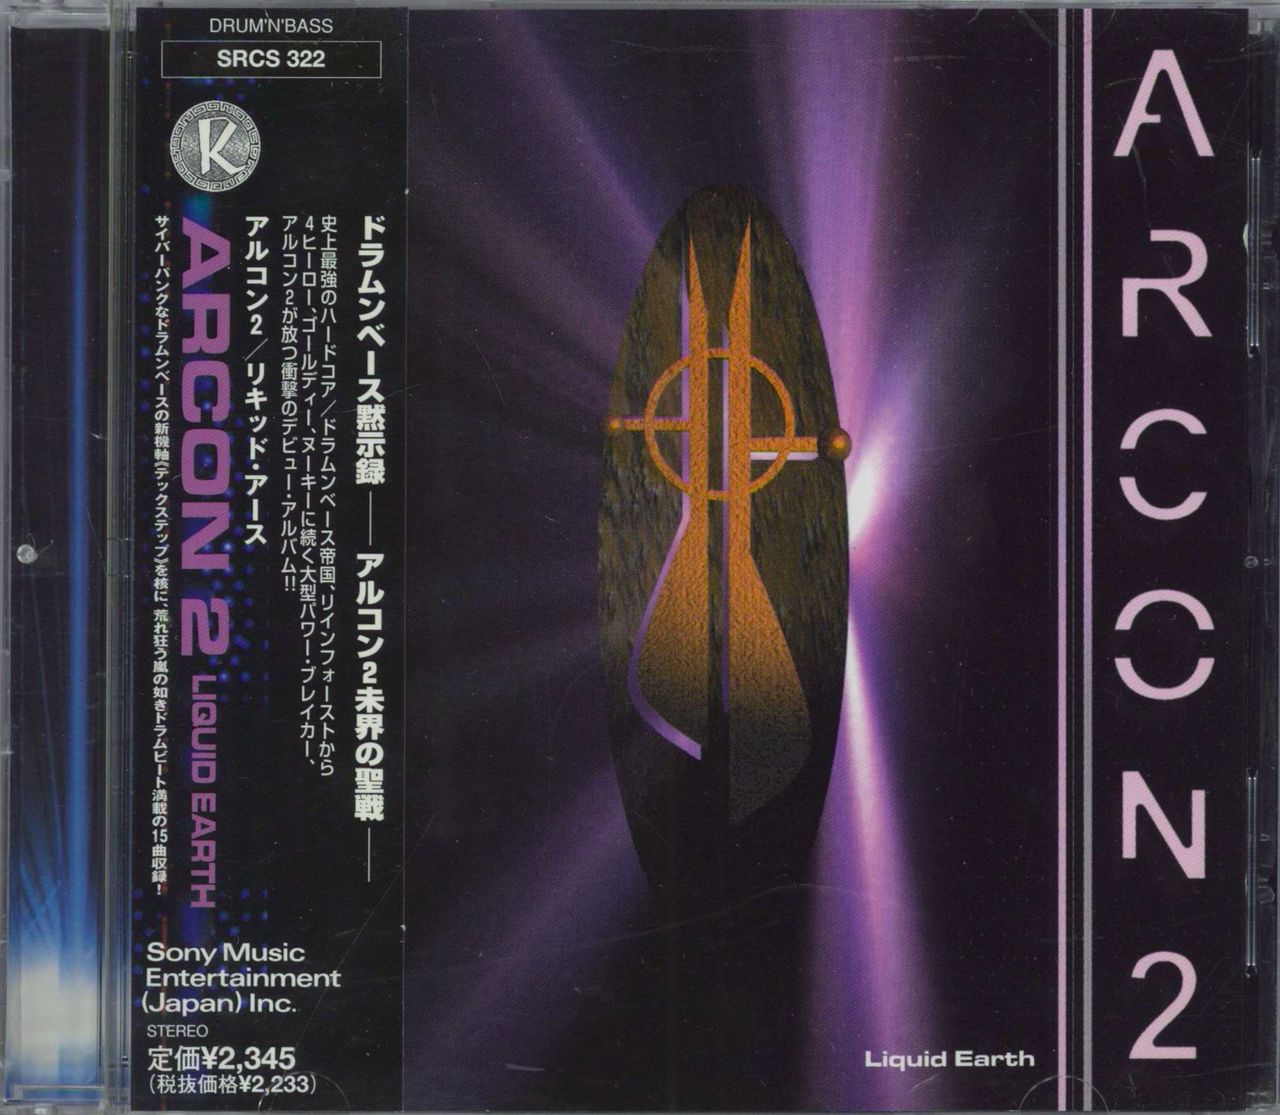 Arcon 2 Liquid Earth Japanese Promo CD album (CDLP) SRCS322